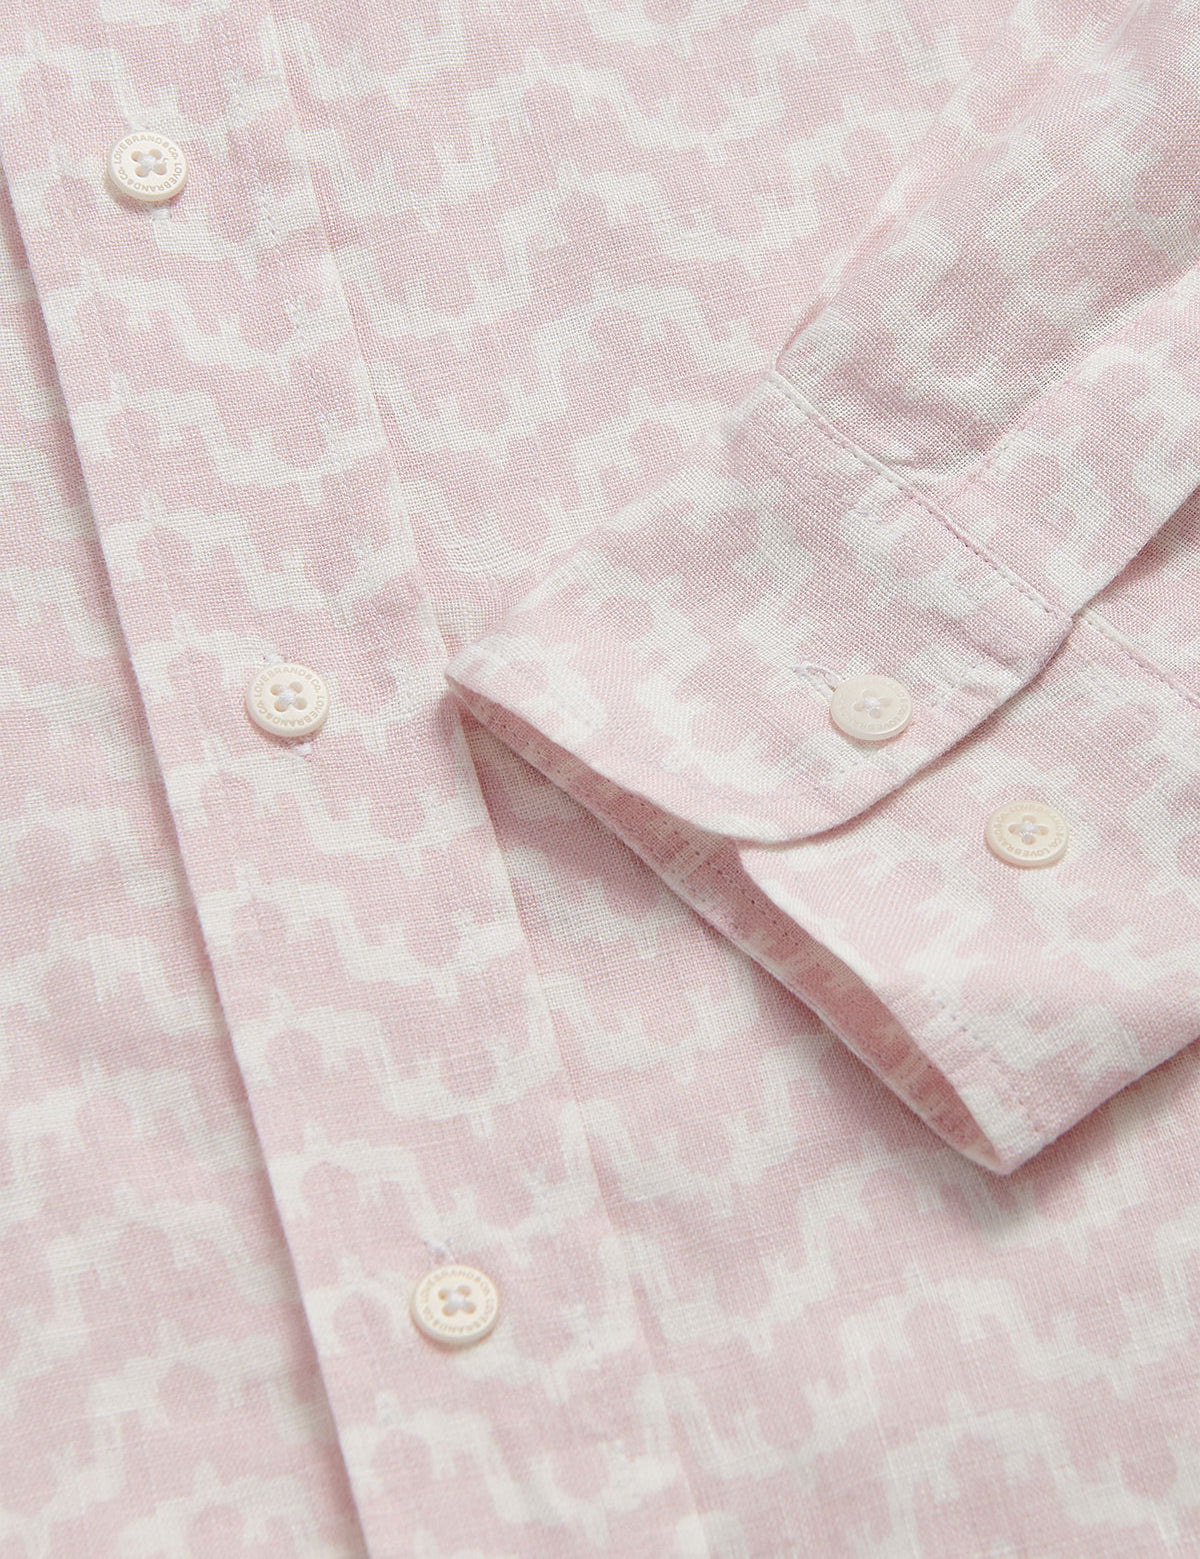 Men's Elephant Palace Pink Abaco Linen Shirt close-up, showcasing lightweight linen fabric and button details.